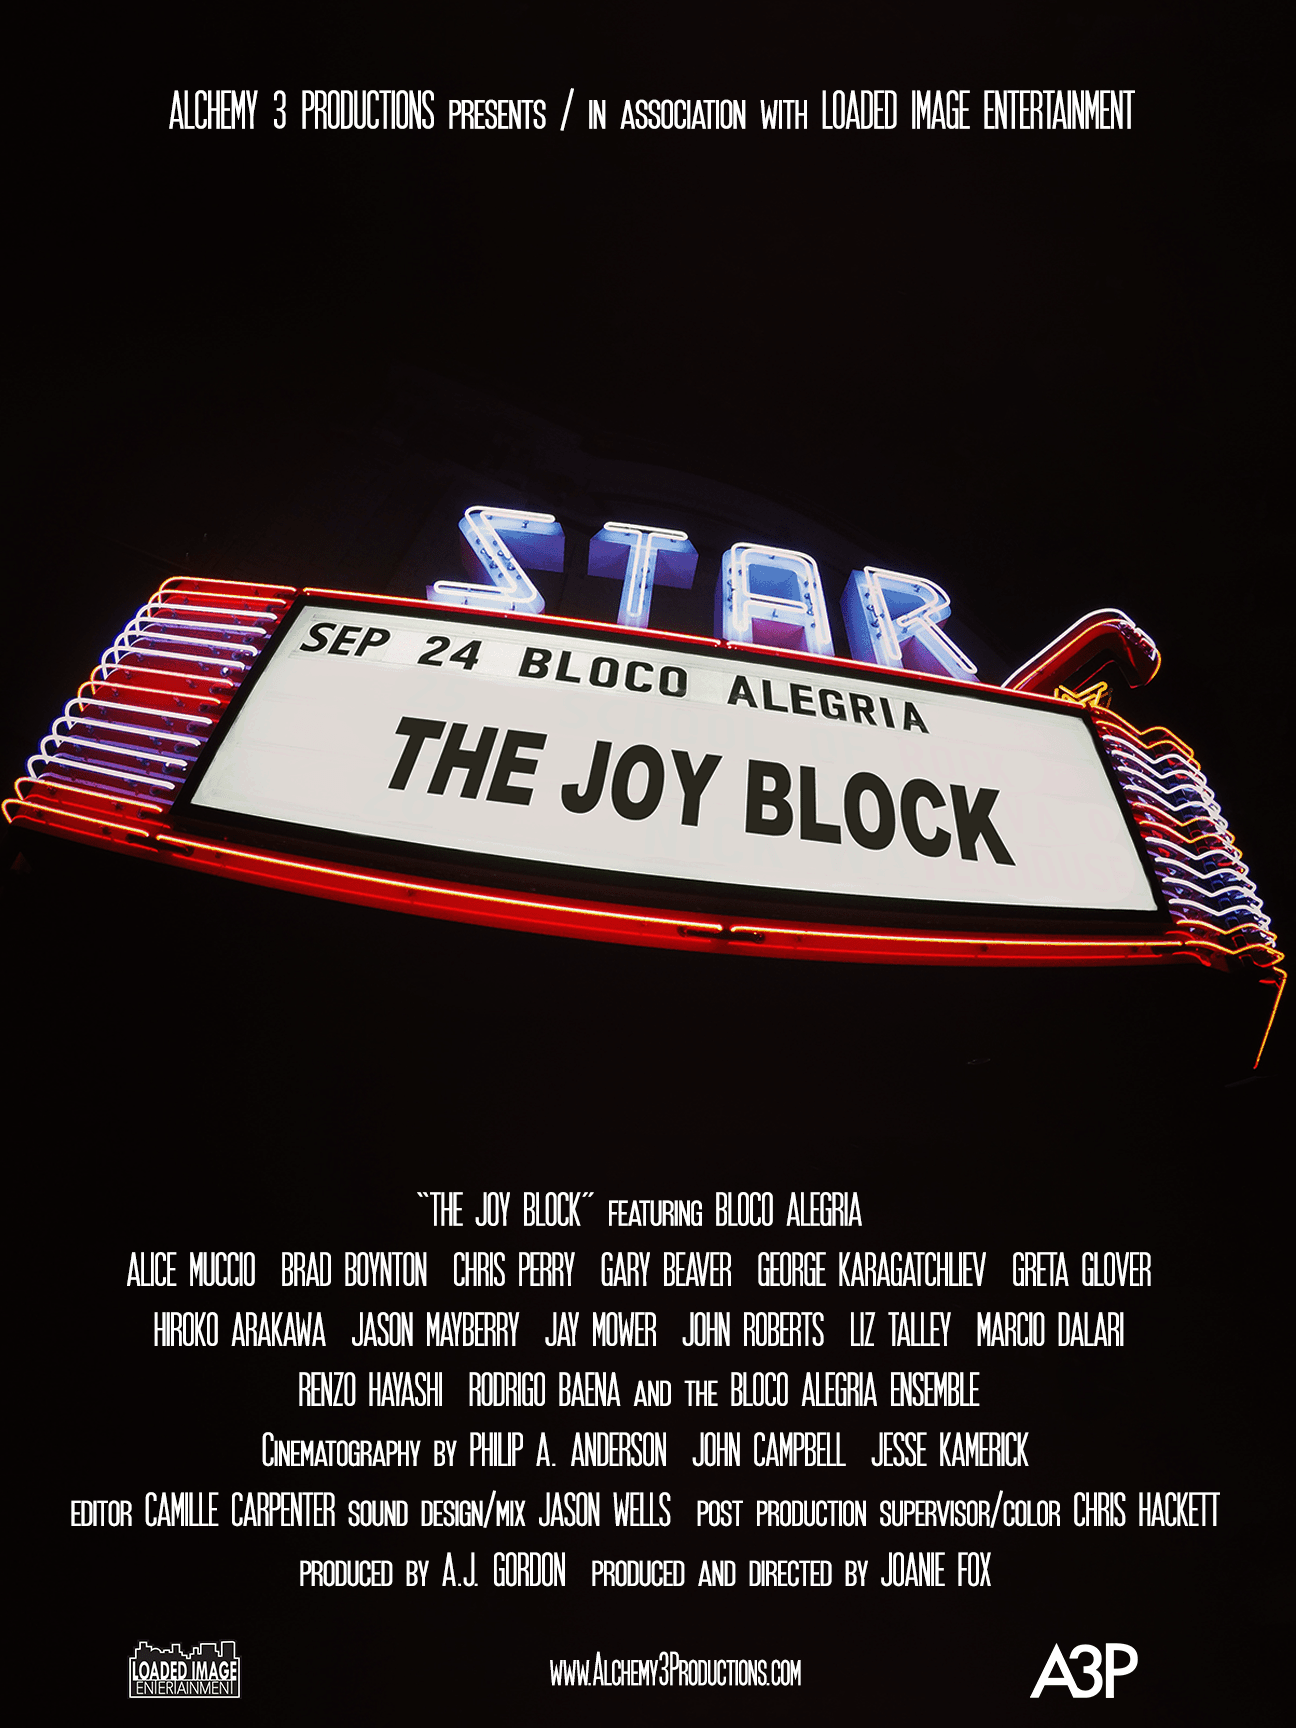 The Joy Block*